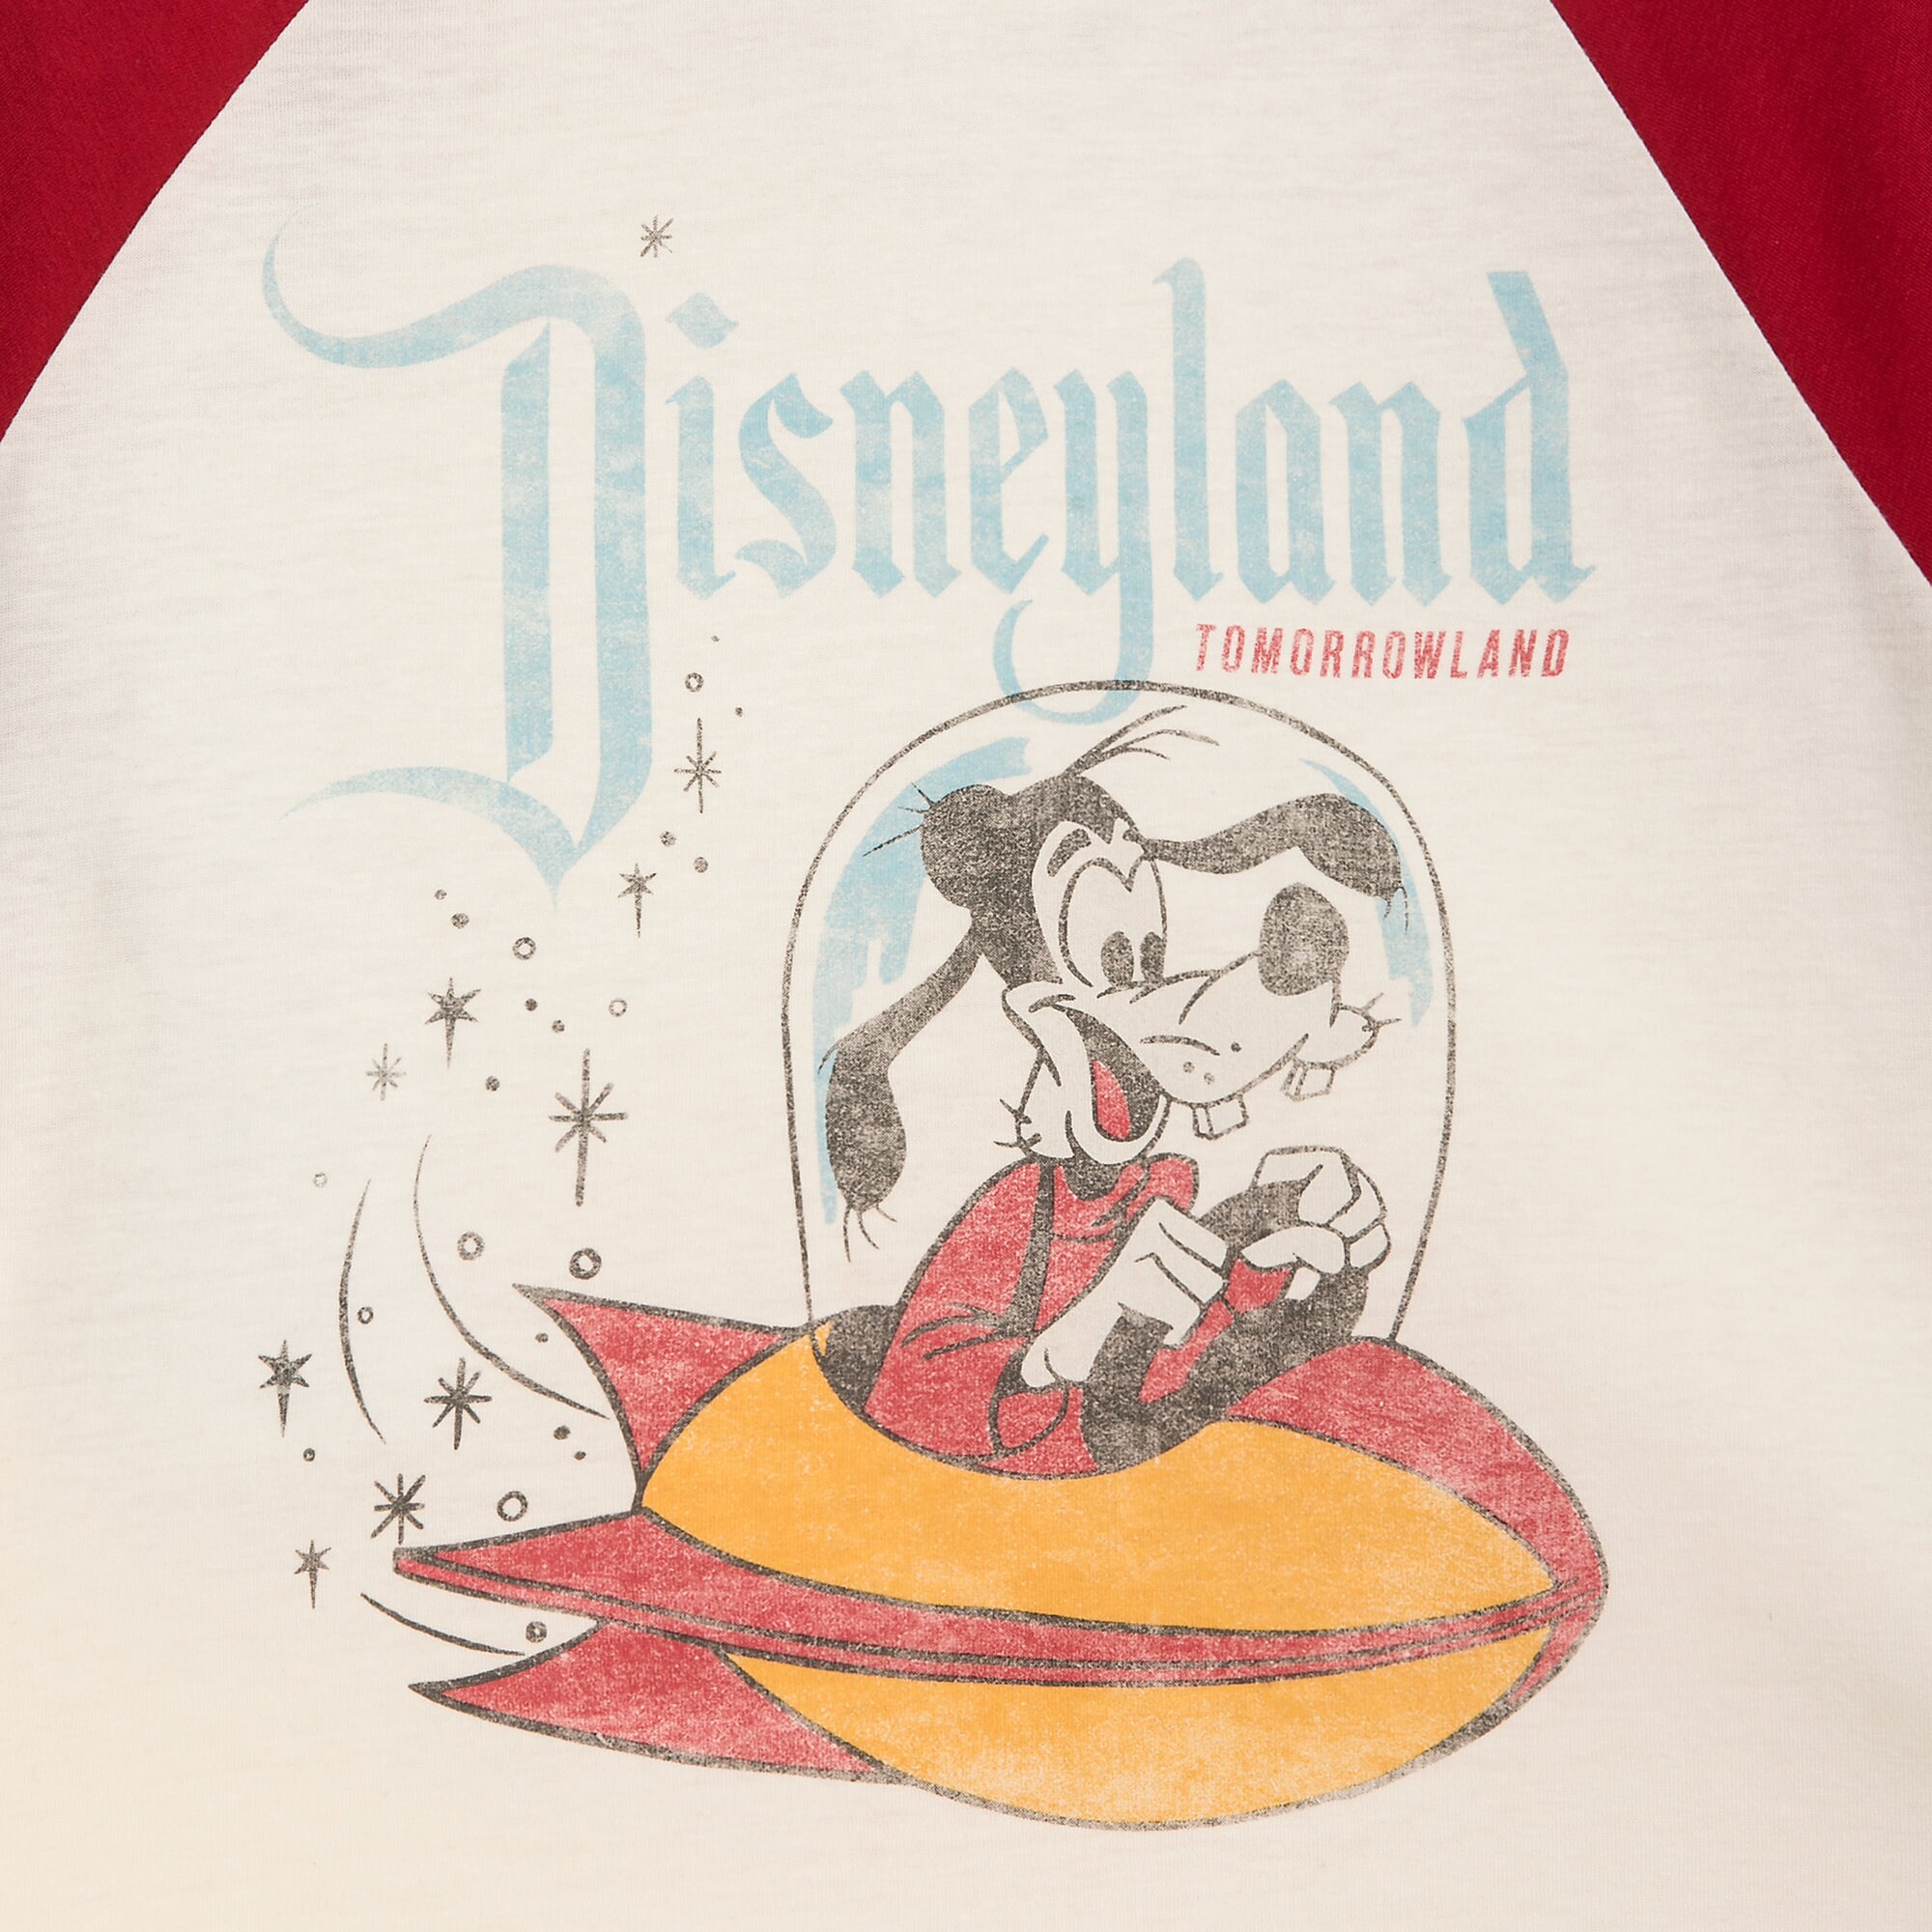 Goofy Tomorrowland Raglan T-shirt for Men by Junk Food - Disneyland